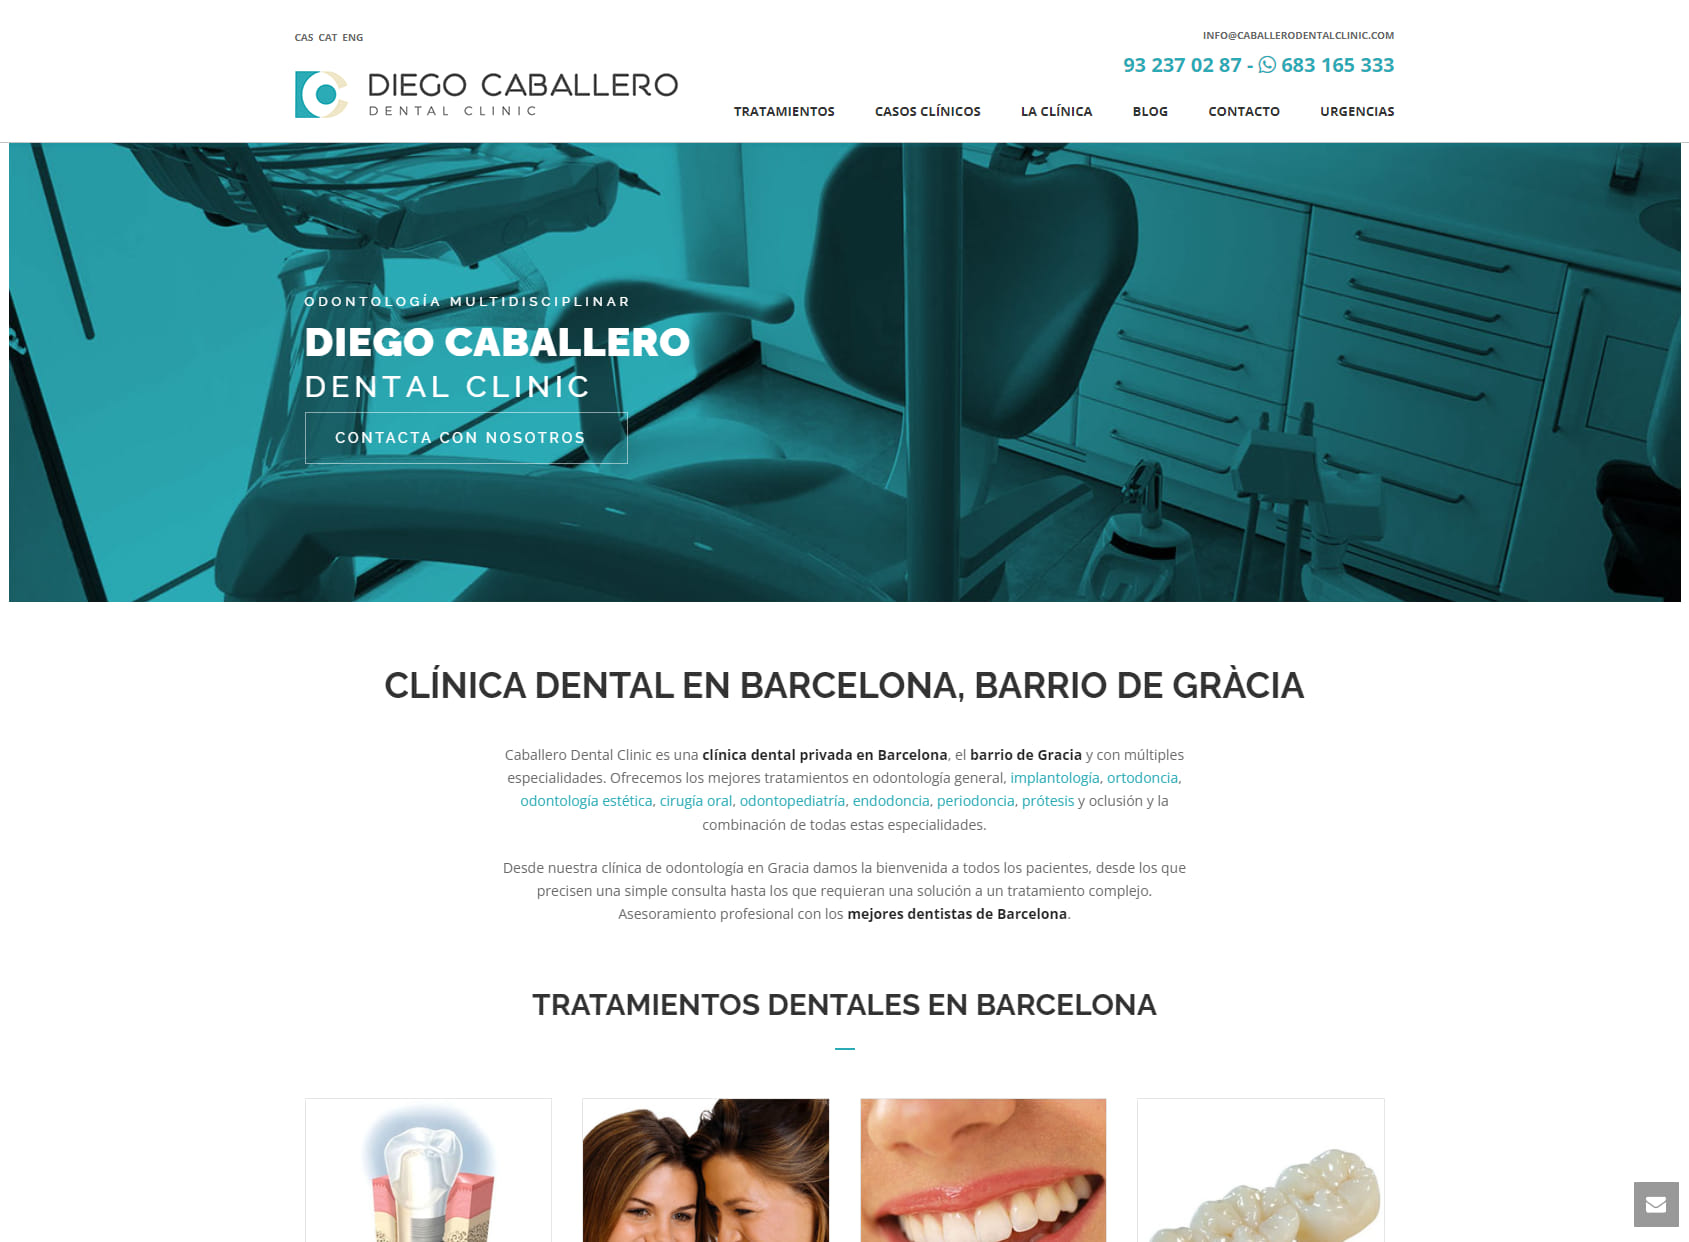 Diego Caballero Dental Clinic